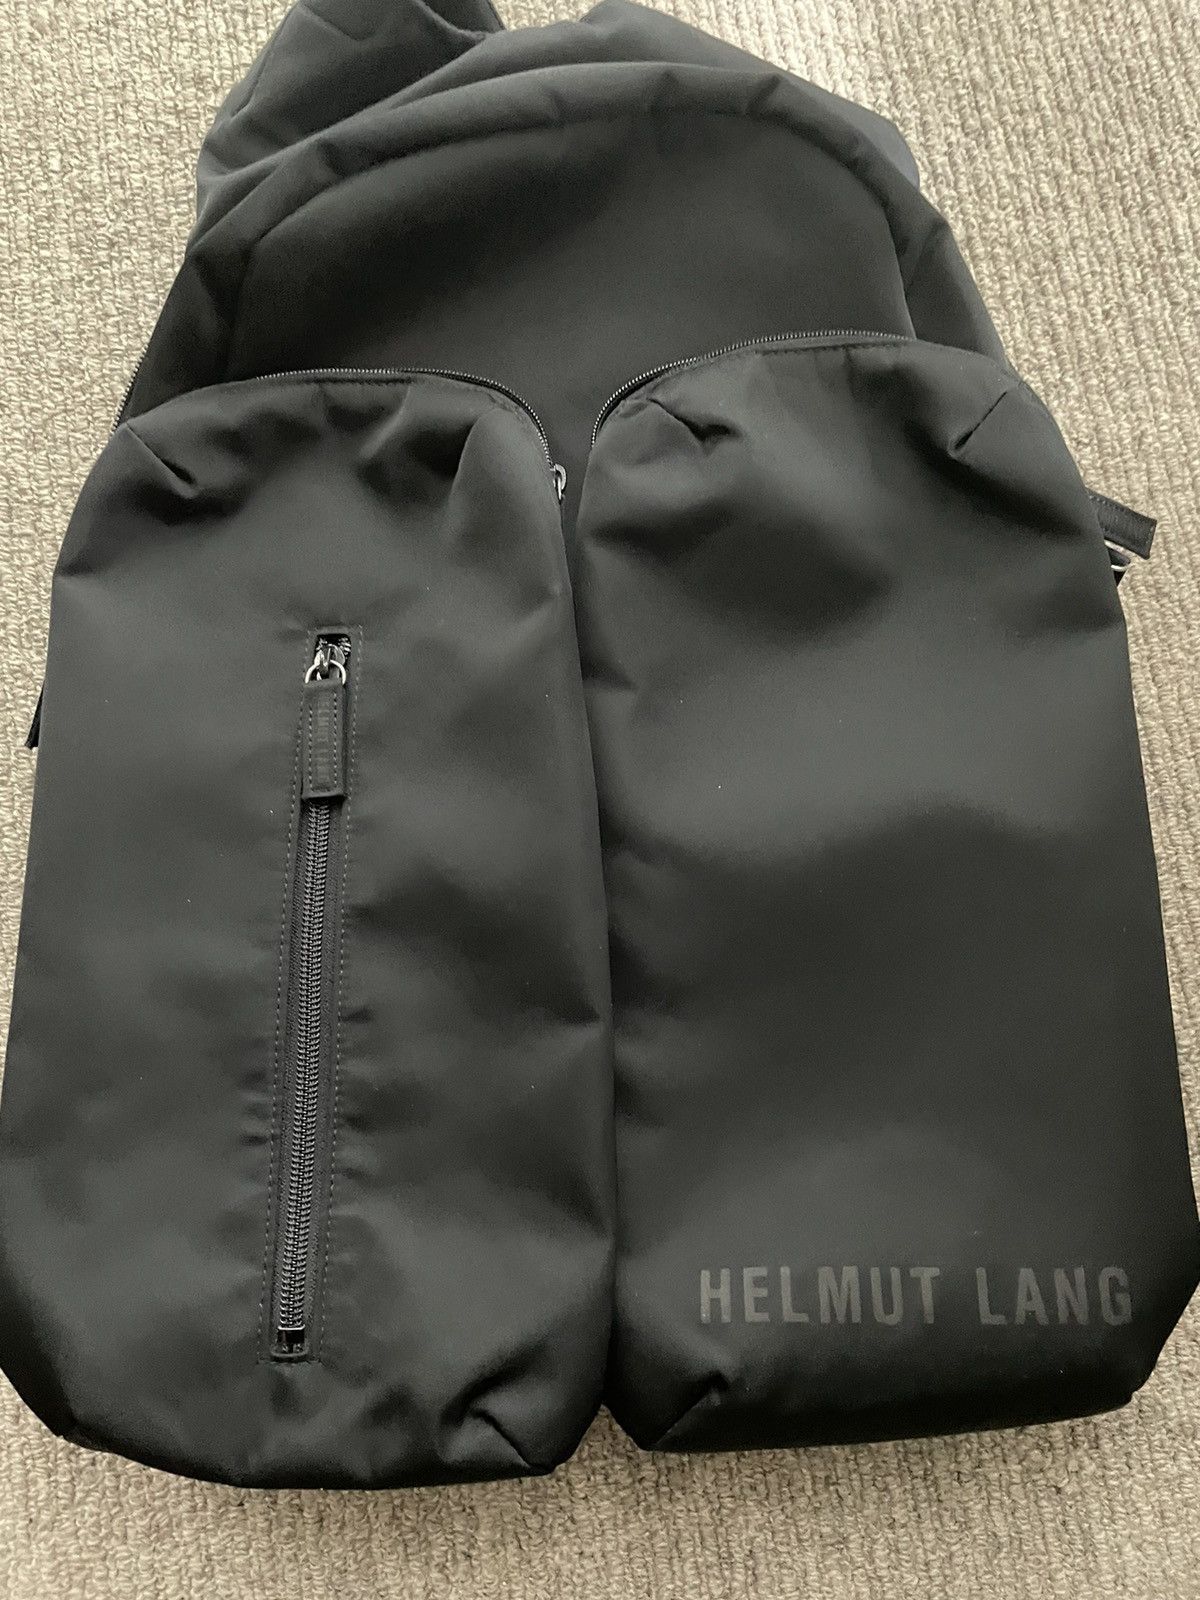 Helmut Lang Backpack | Grailed